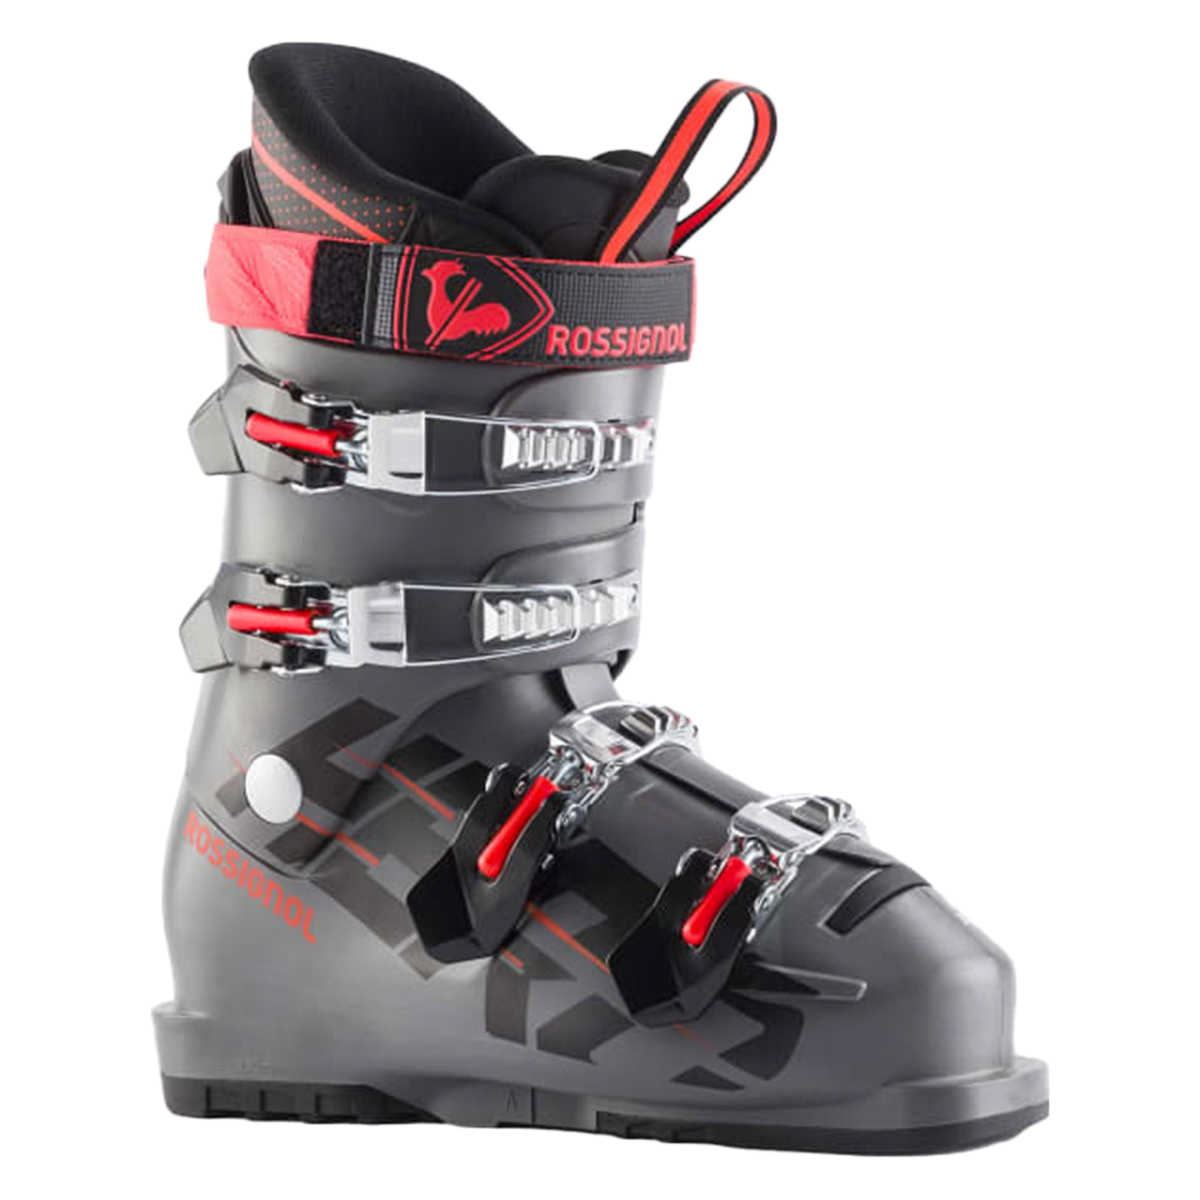 ROSSIGNOL HERO JR 65 alpine ski boots - meteor grey